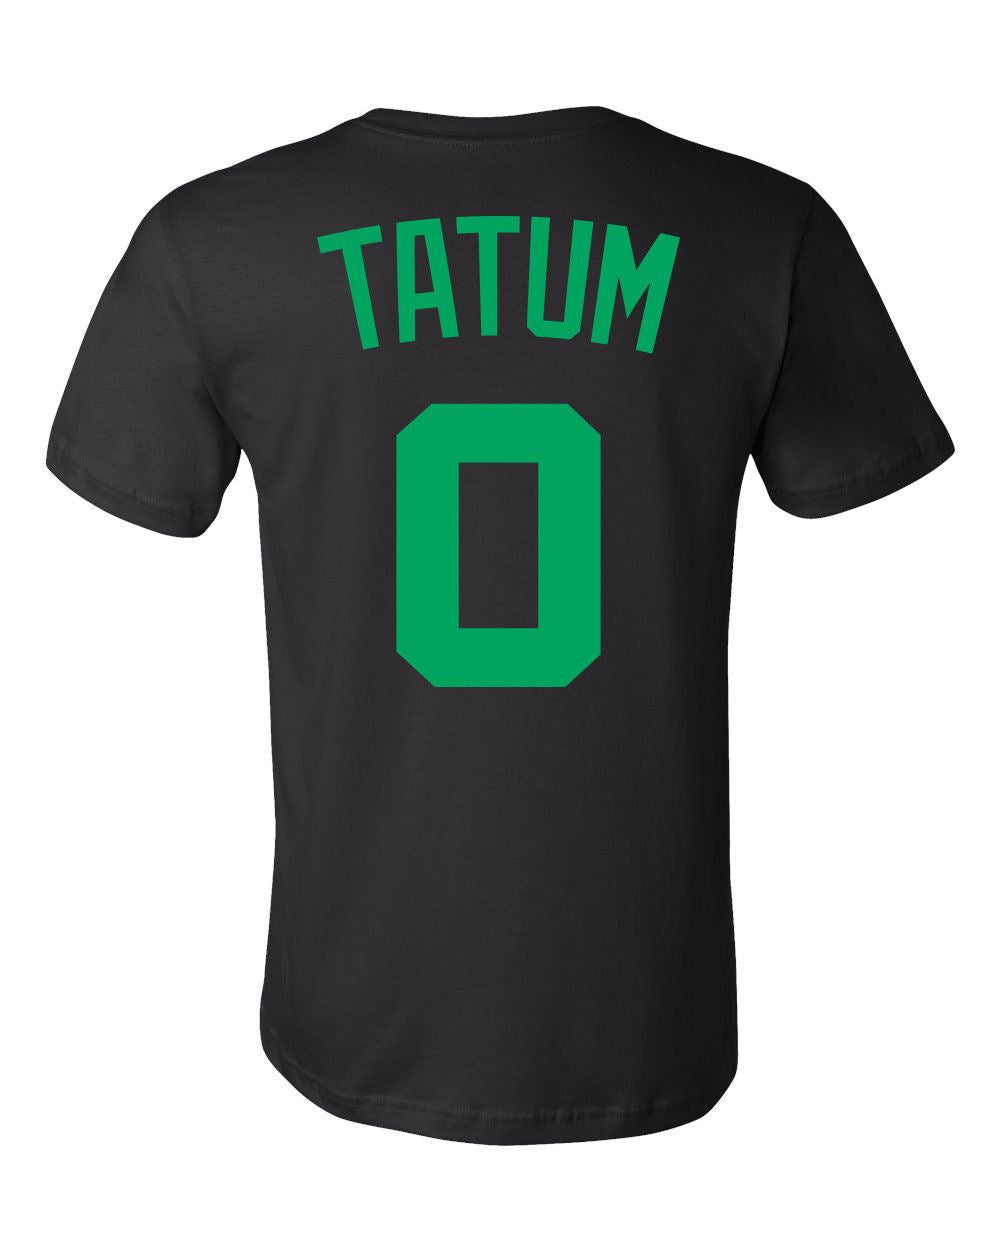 Jayson Tatum 0 Celtics Jersey Logo Typography -  New Zealand